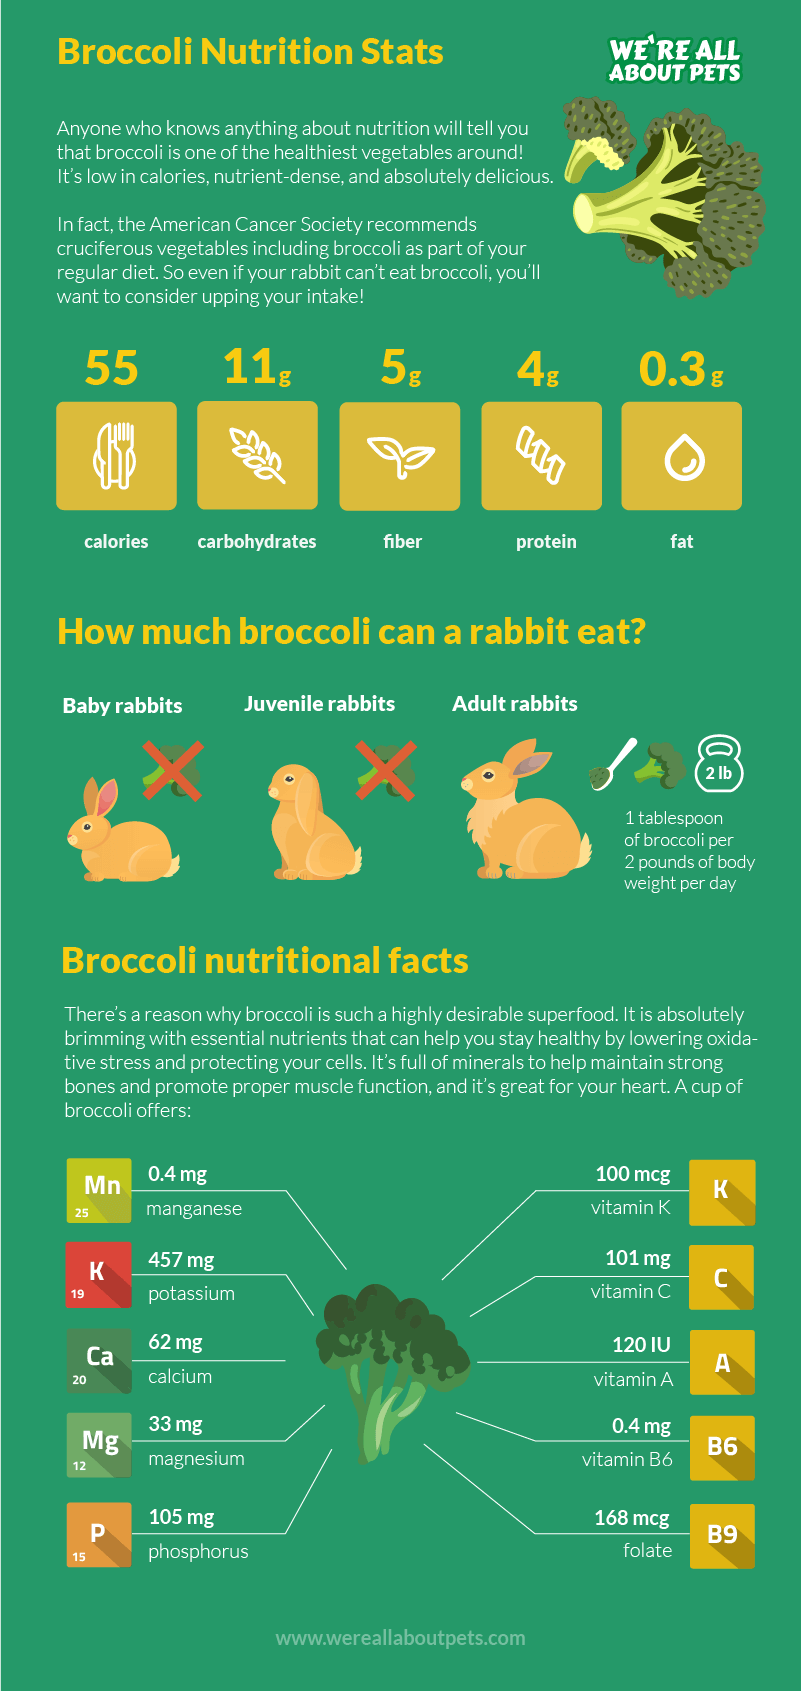 What happens if rabbits eat broccoli?